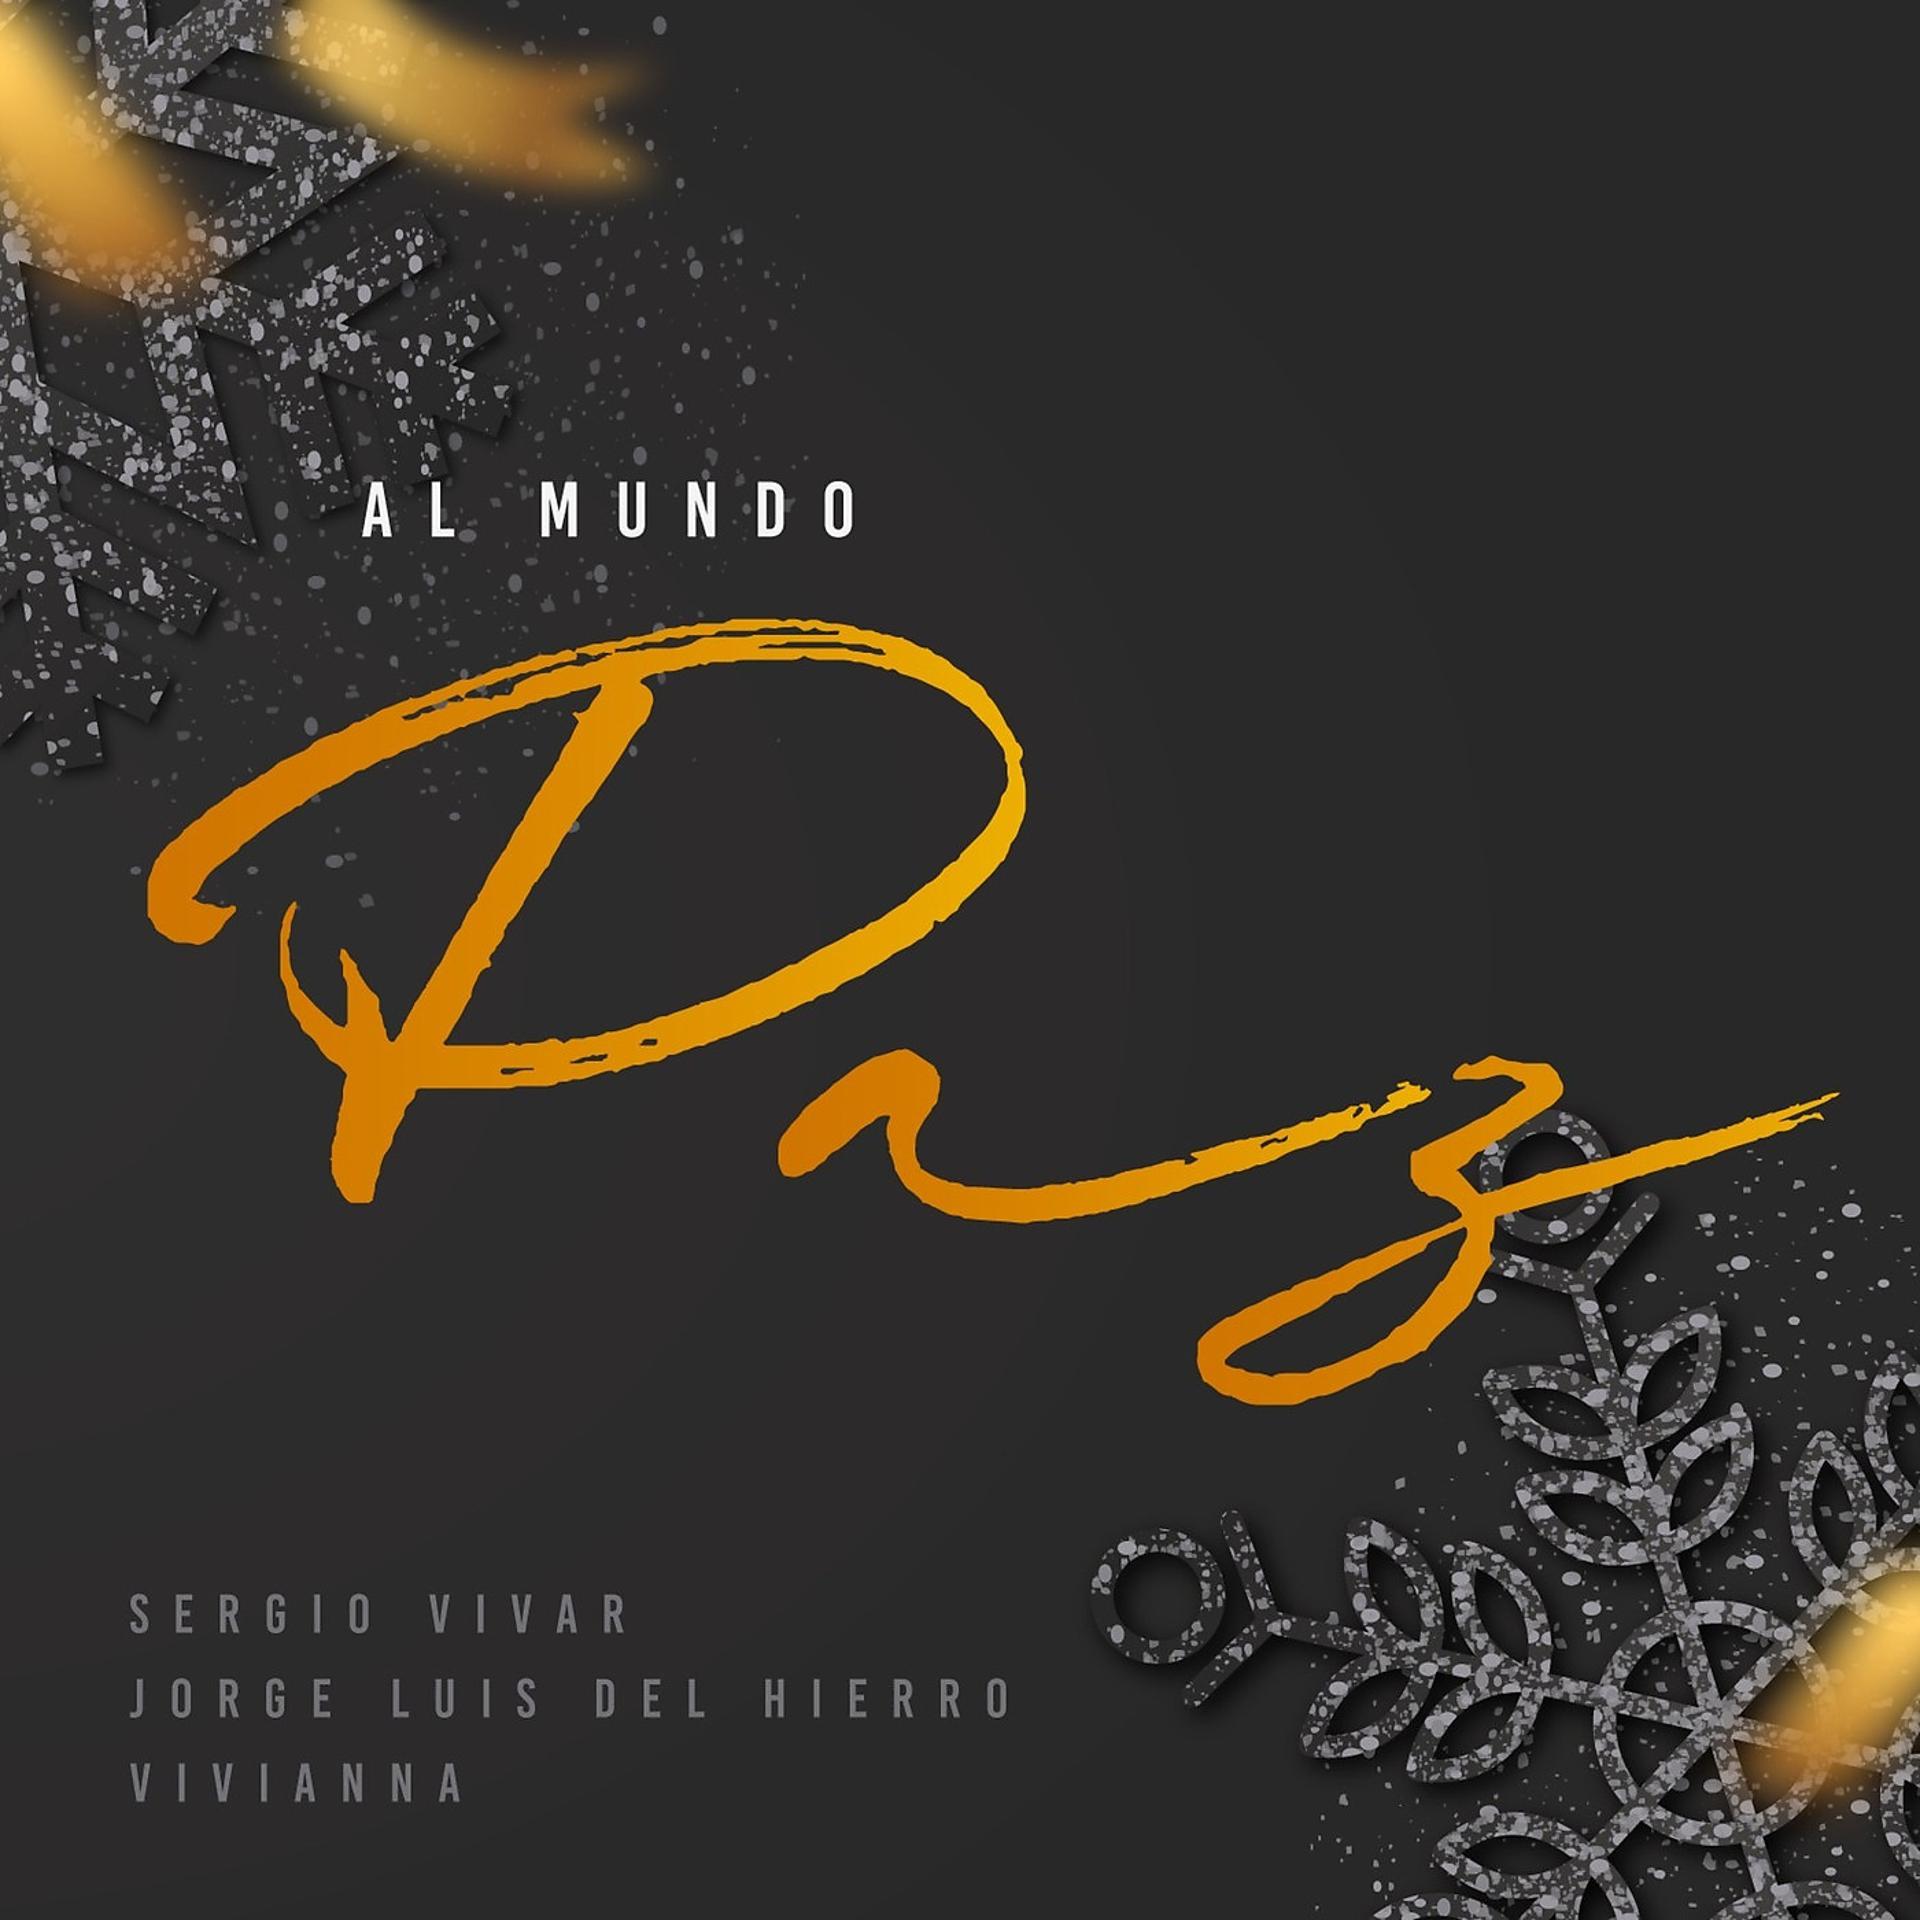 Постер альбома Al Mundo Paz